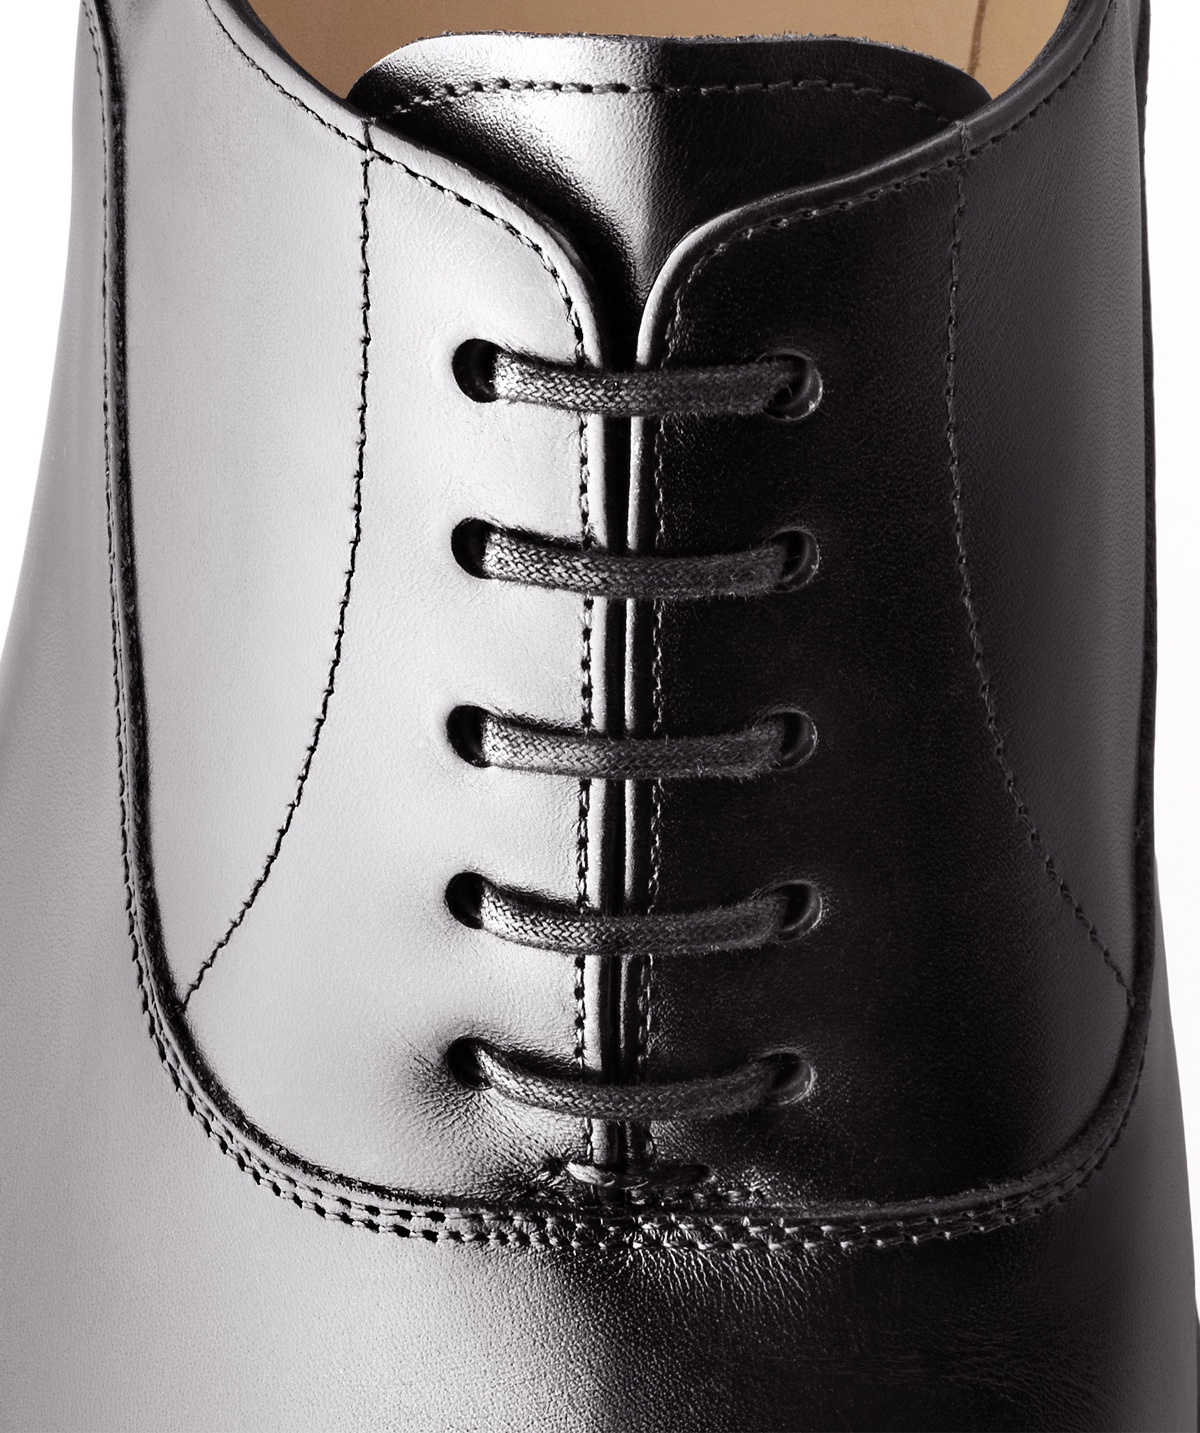 BRAD - Chaussures homme Oxford (Richelieu) noir